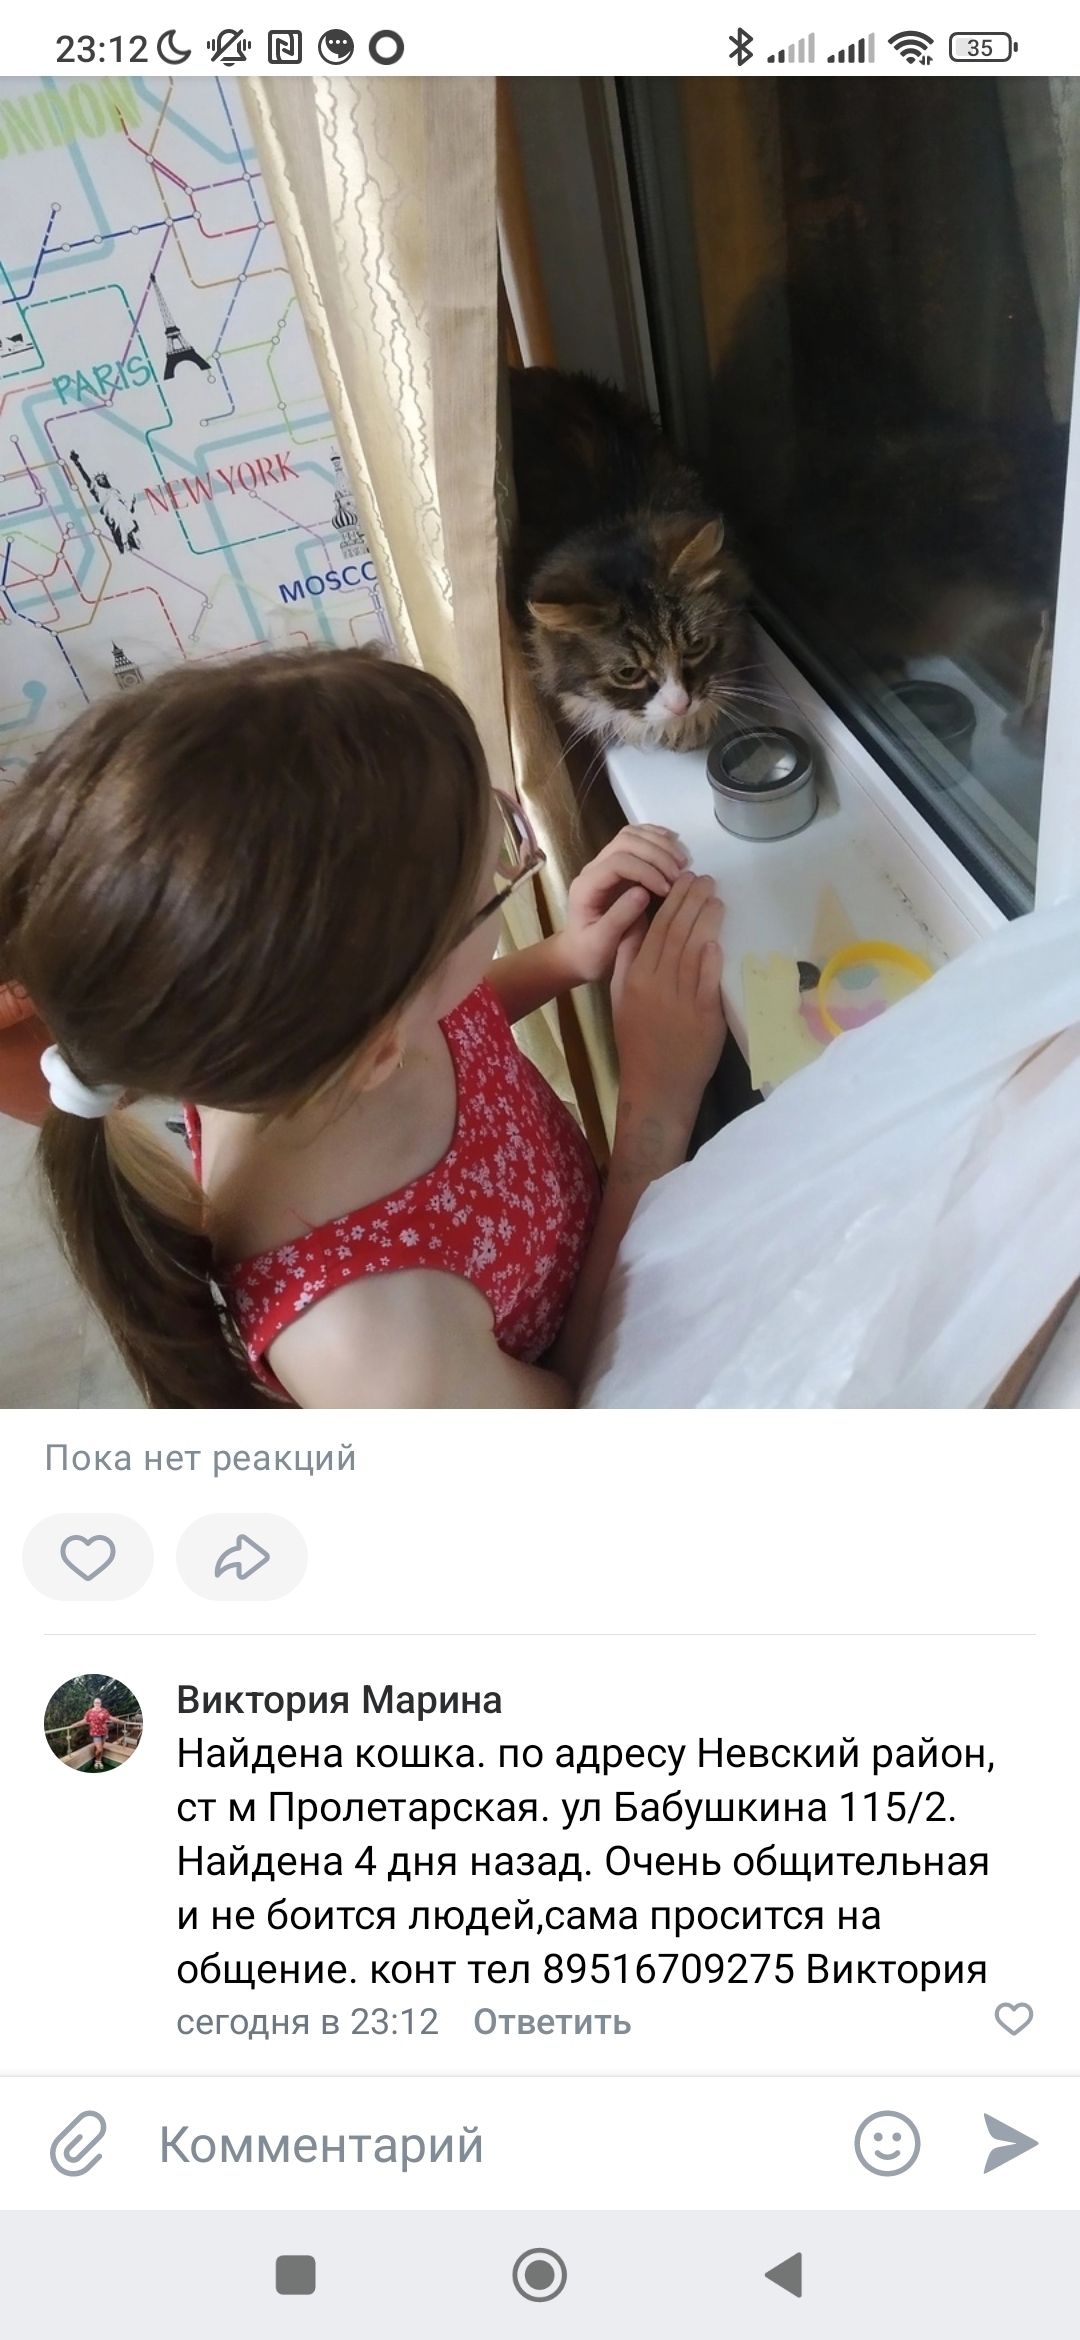 Найдена пушистая трехцветная кошка, ул. Бабушкина, 115 к2 литД, Санкт-Петербург